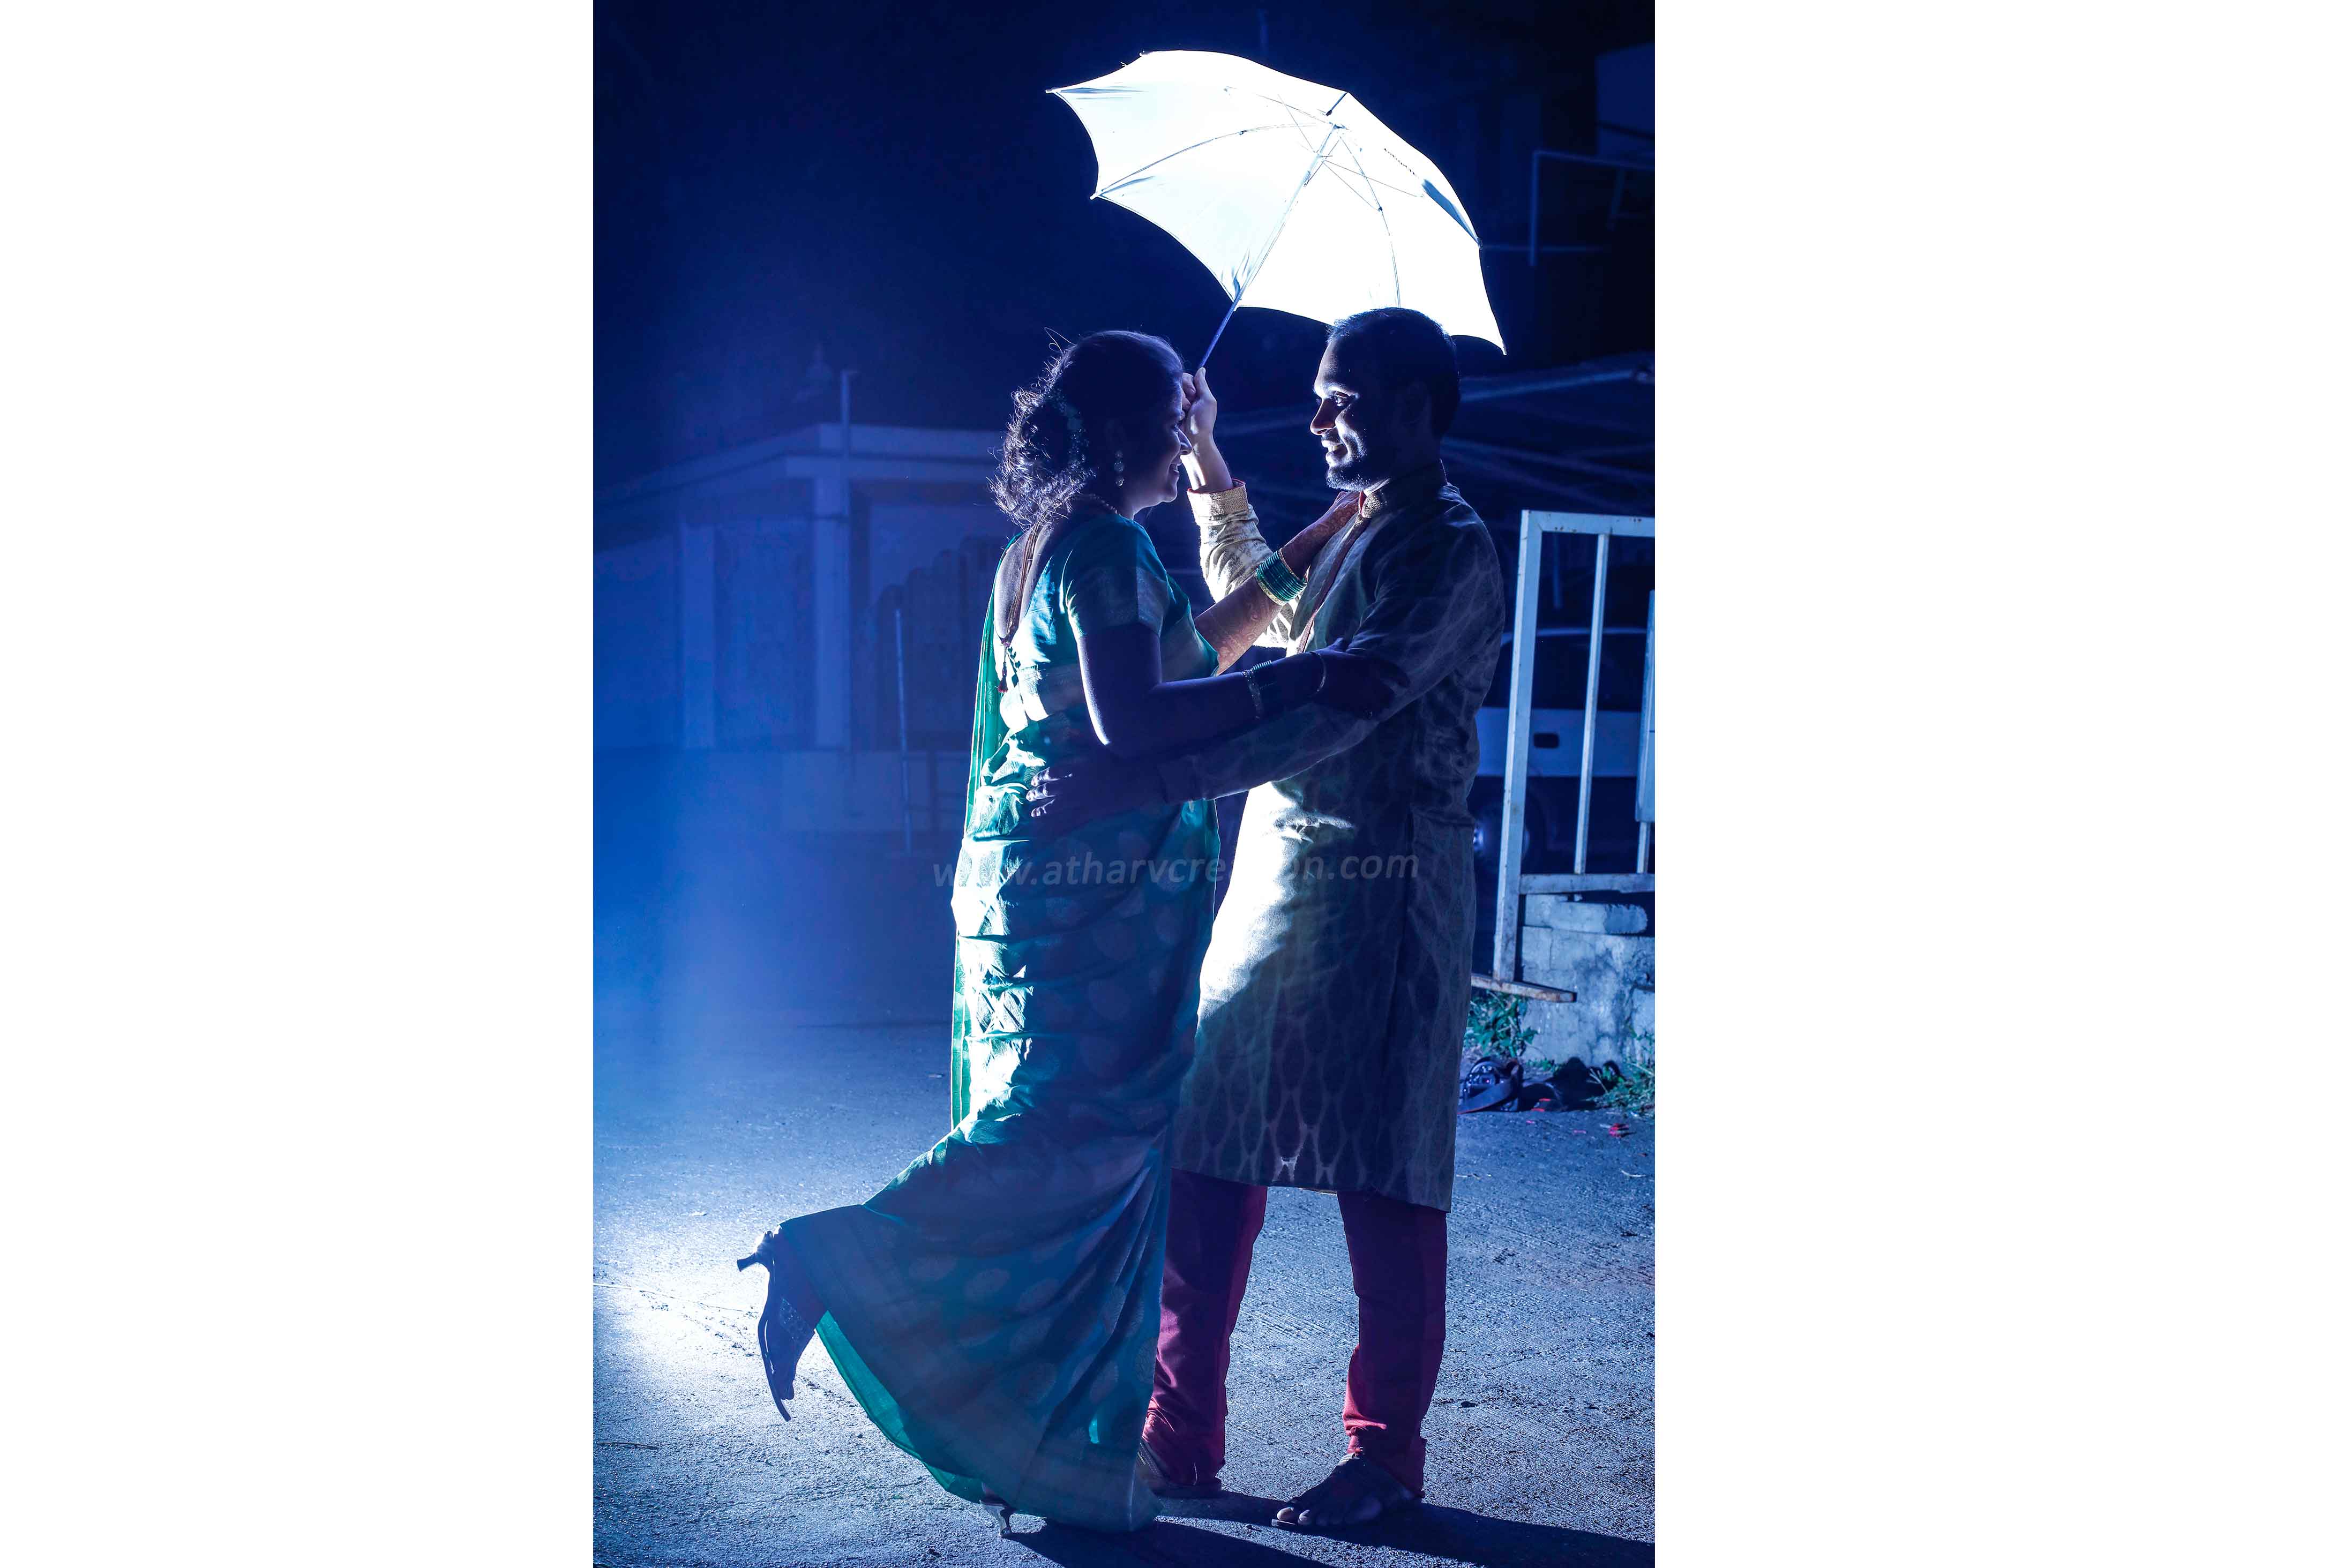 wwwatharvcreationcom,wedding moments, chetan misal, photographer in pune, atharva creation, atharv creation